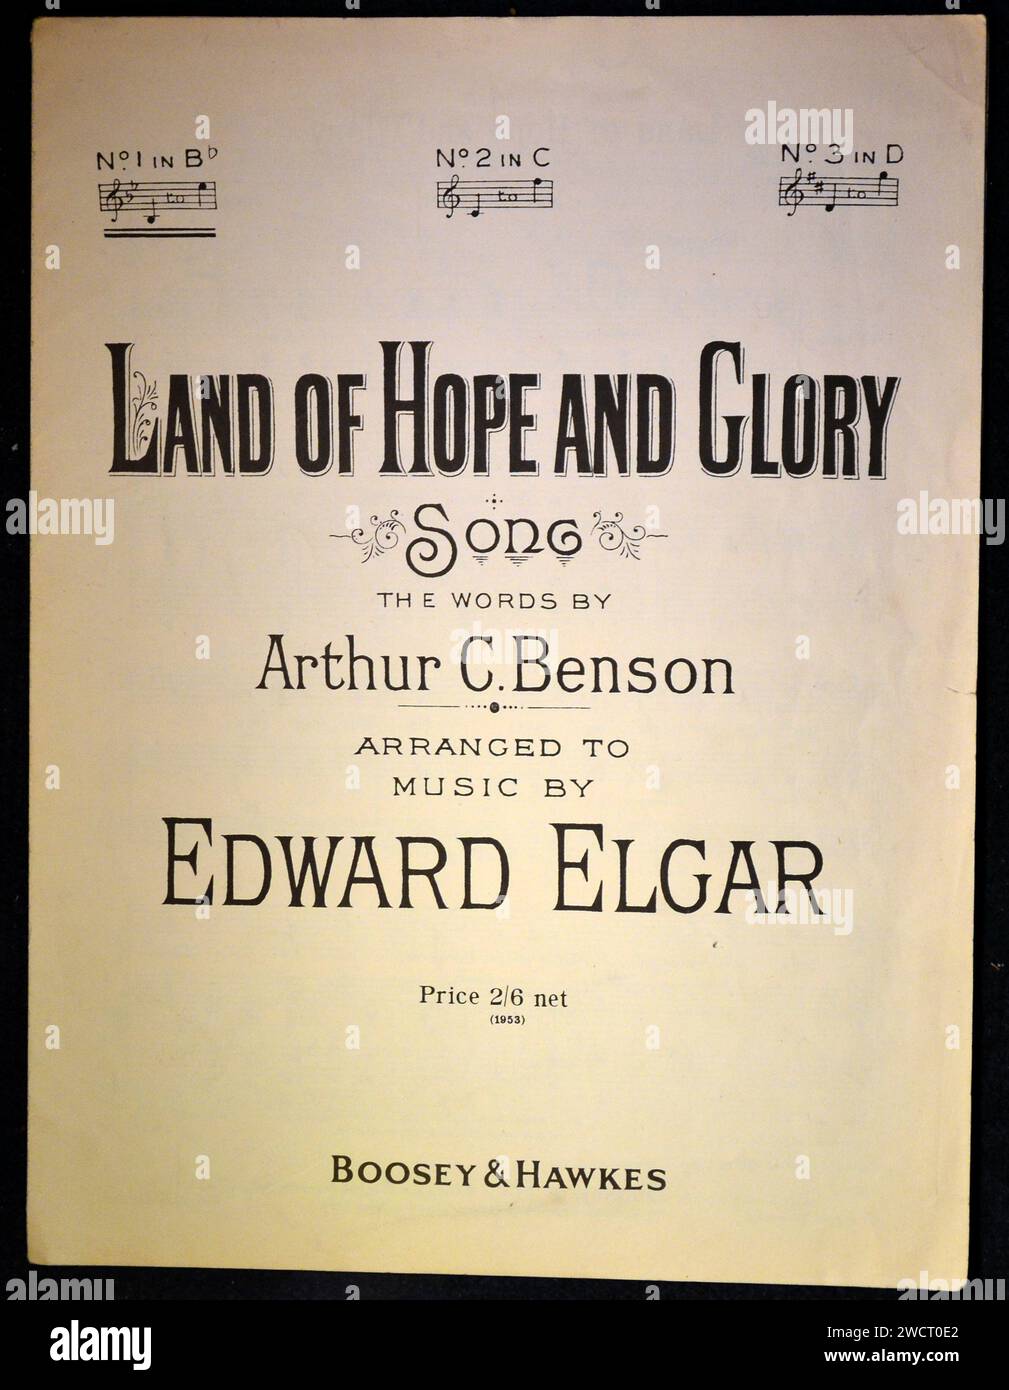 Copertina di spartiti inglesi antichi: Land of Hope and Glory Foto Stock